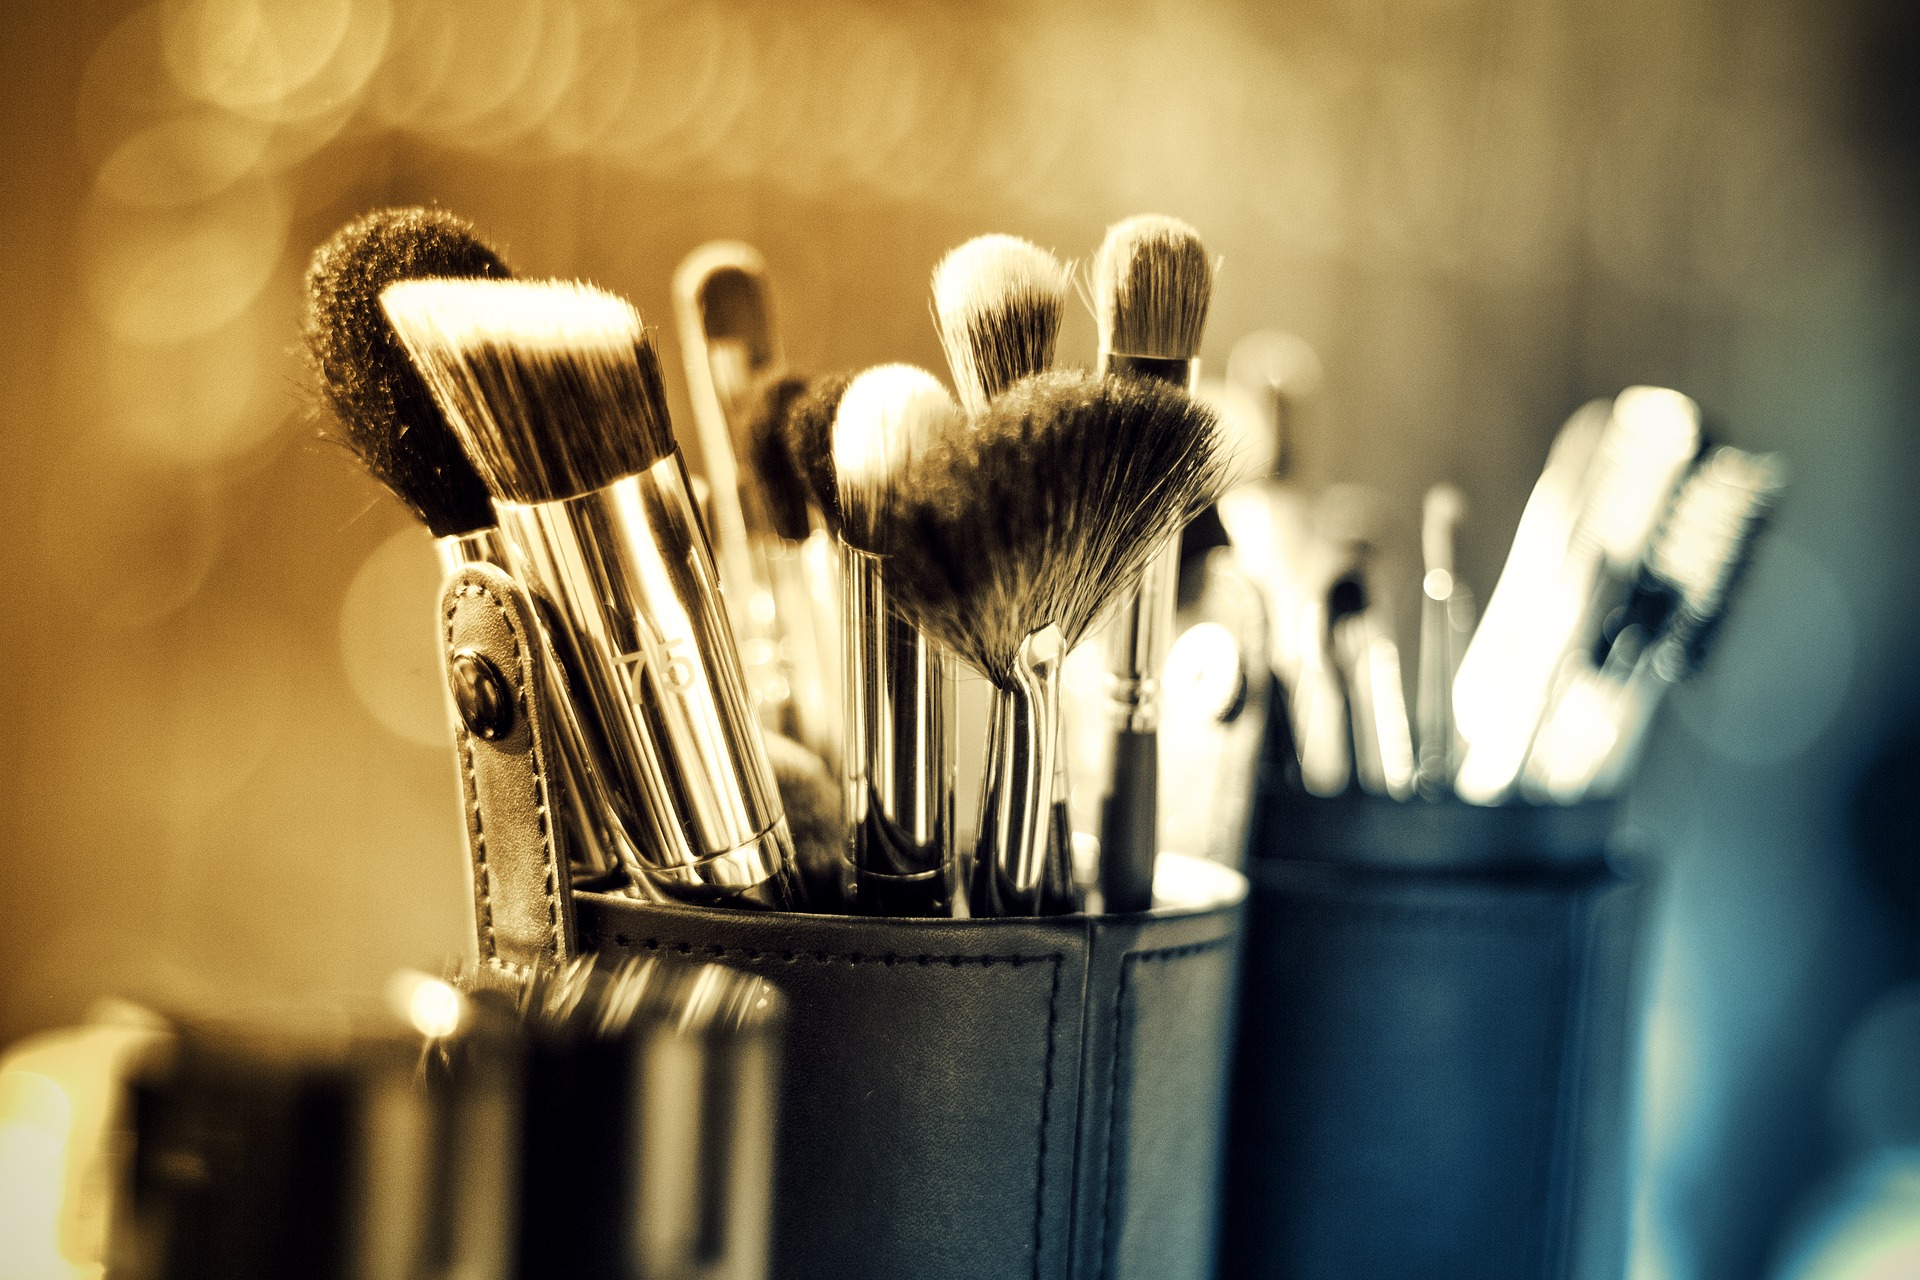 Makeup brushes, makeup, brushes, top makeup brushes, high-end makeup brushes, bobbi brown, sigma